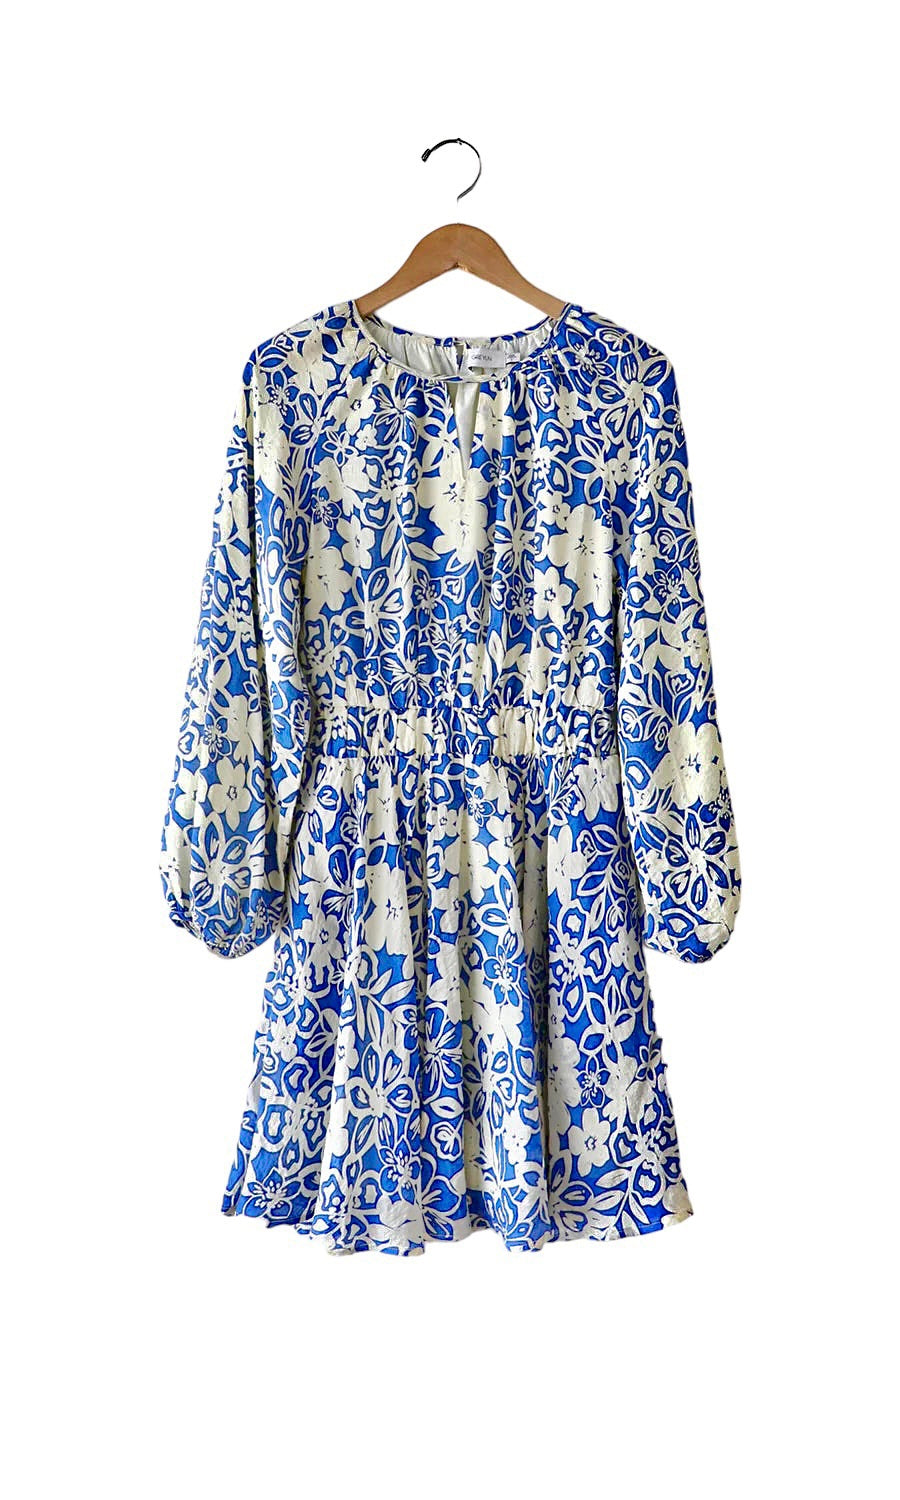 Gigi Mini Dress in ivory/blue by Greylin